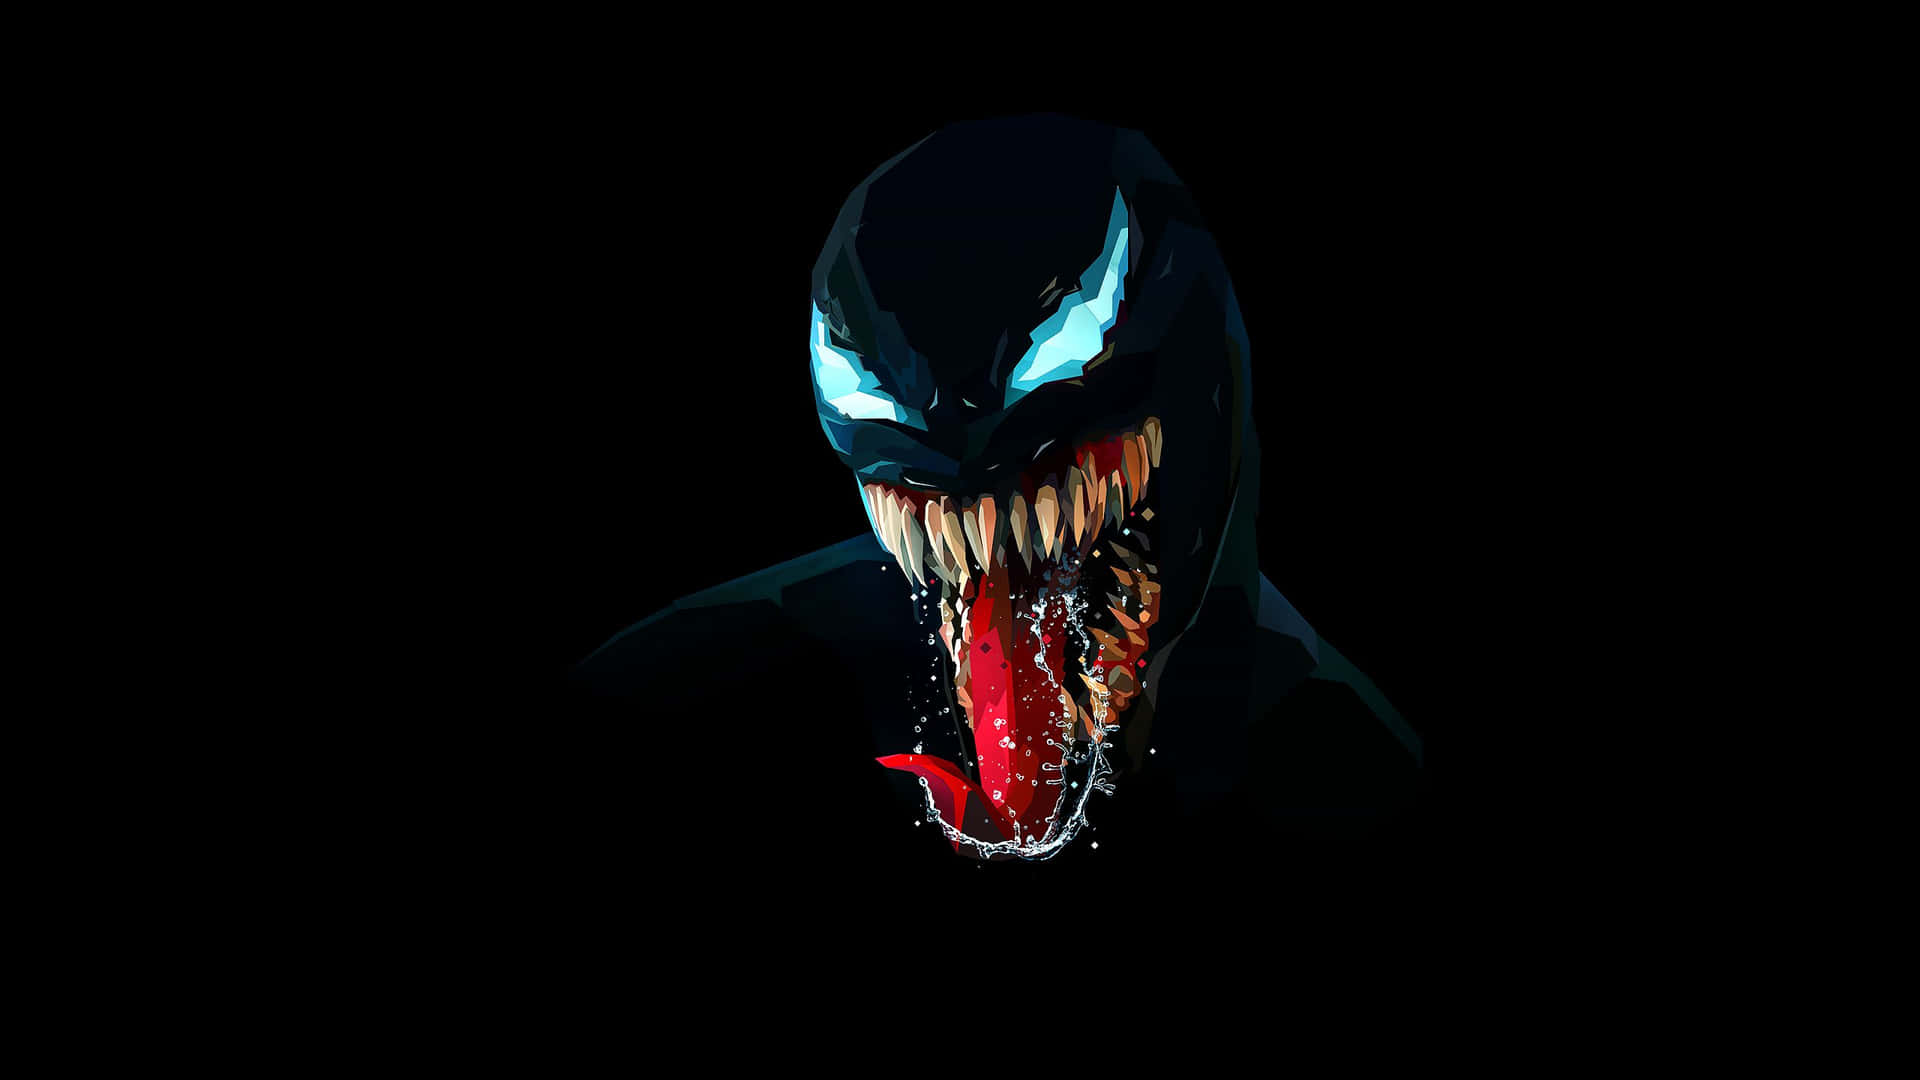 Experience the intense power of Black Venom Wallpaper